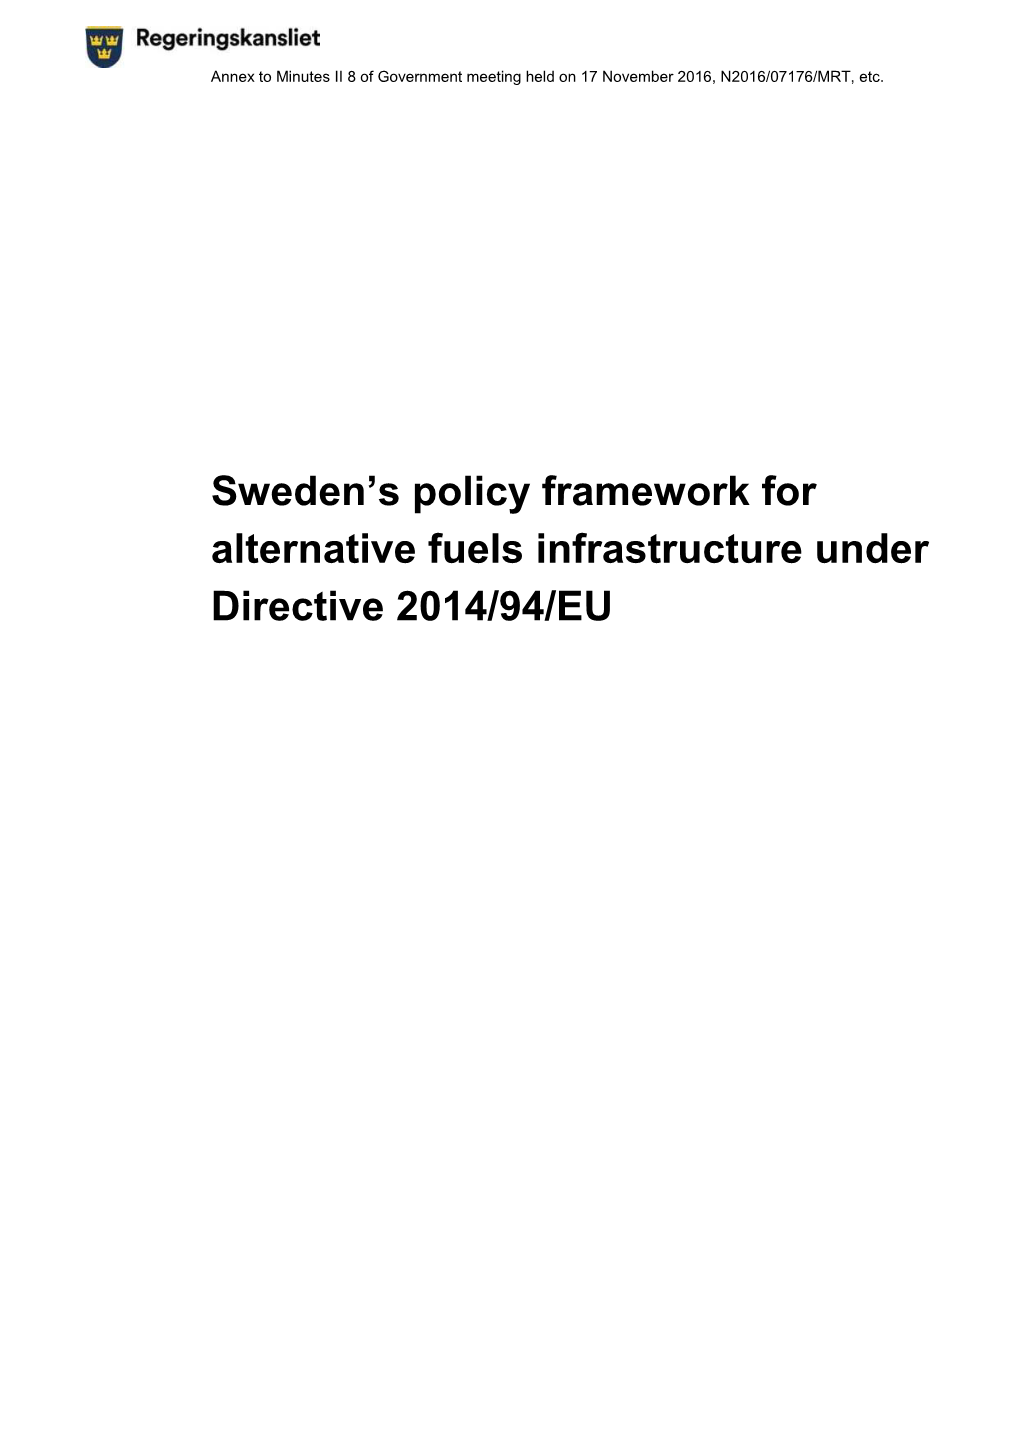 Sweden's Policy Framework for Alternative Fuels Infrastructure Under Directive 2014/94/EU